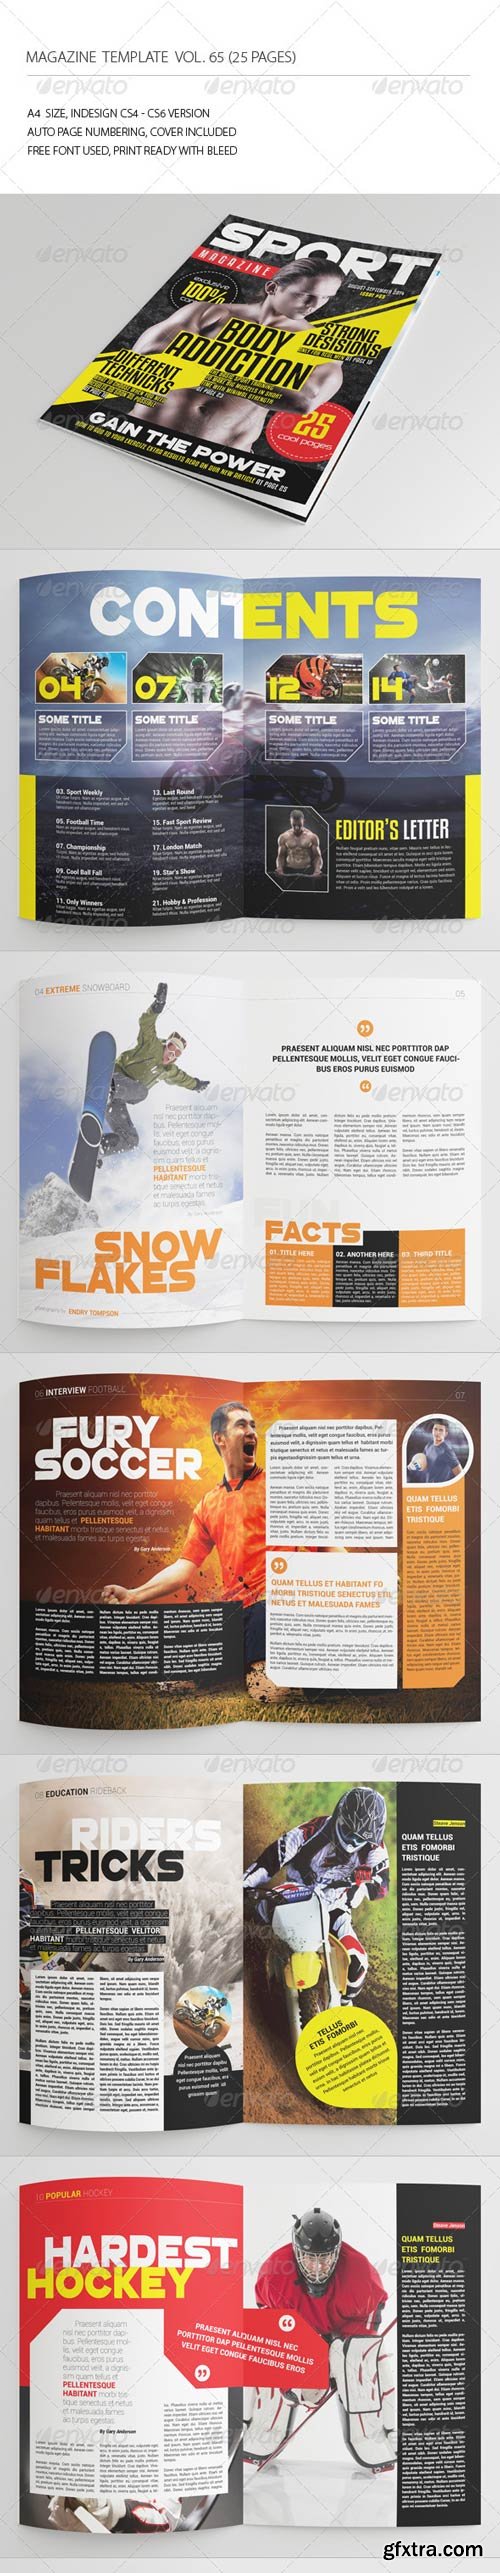 GraphicRiver - 25 Pages Sport Magazine Vol65 - 8141768